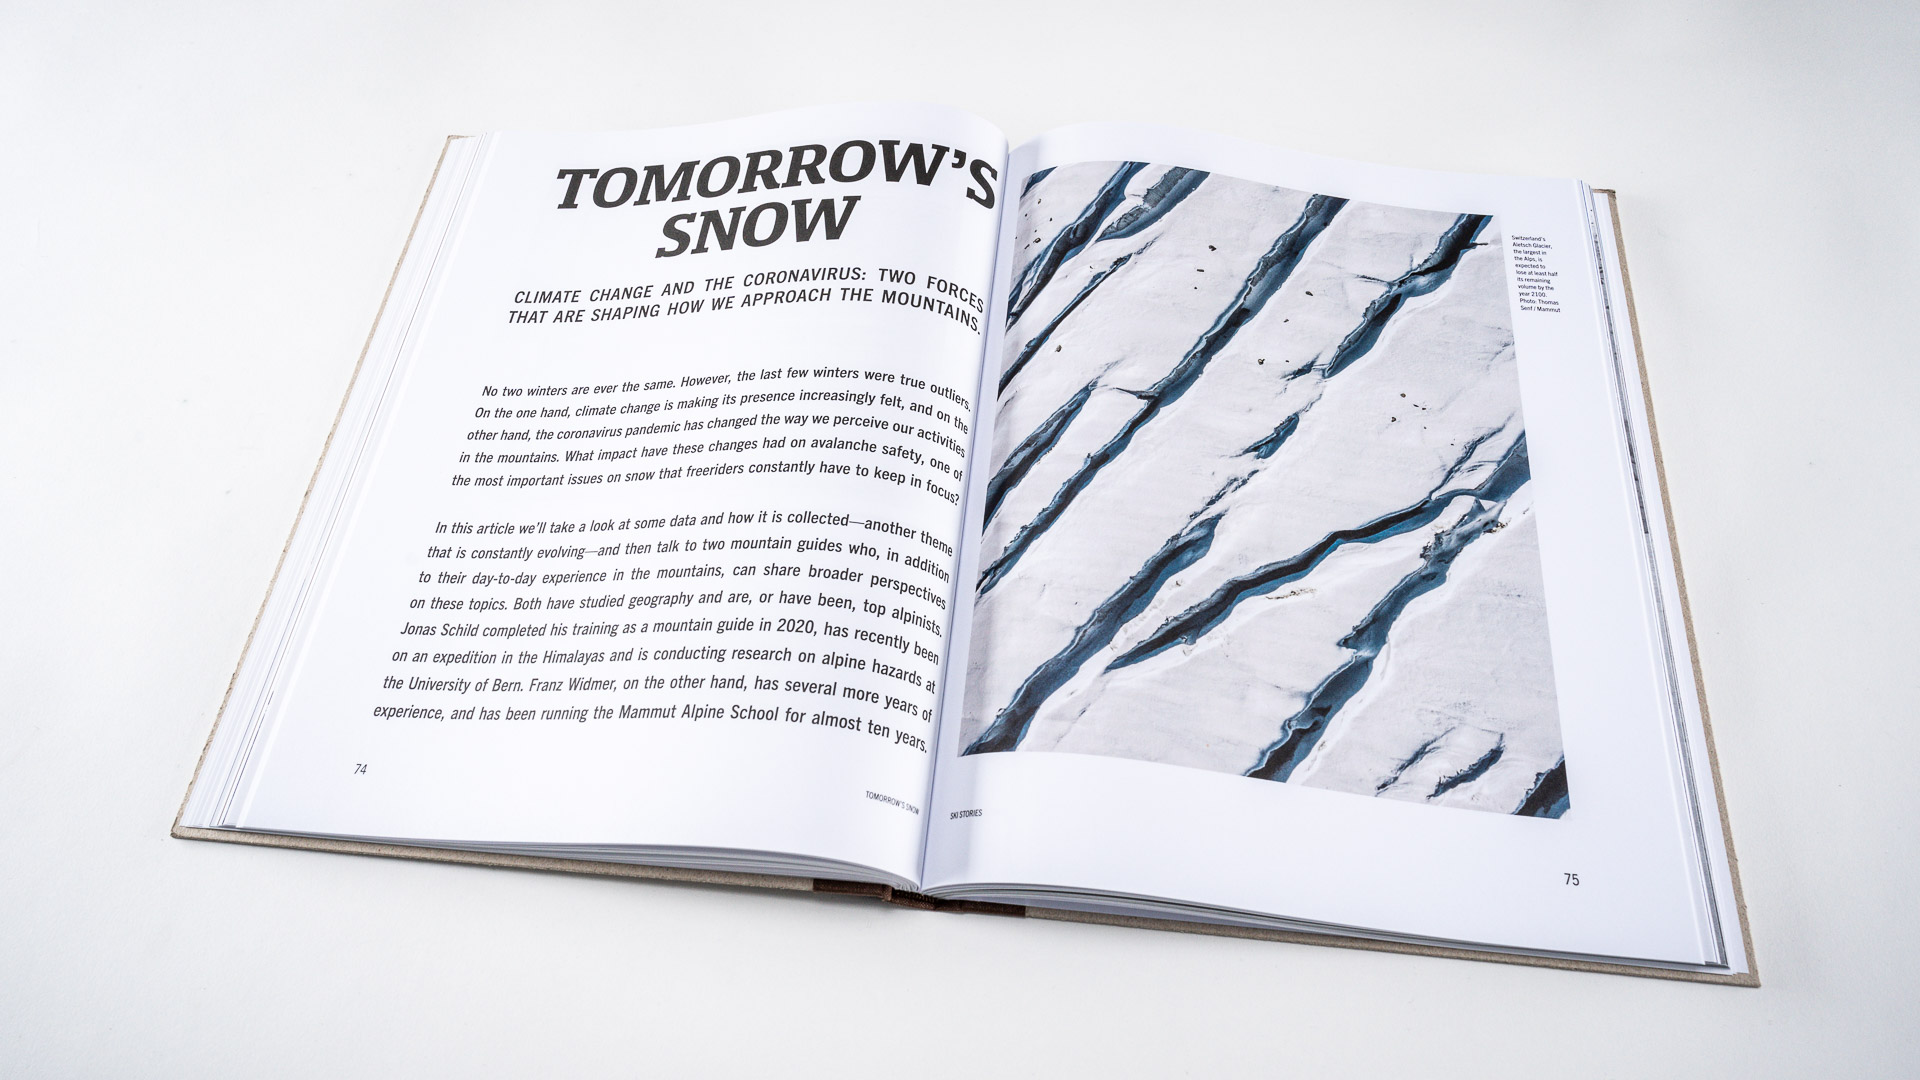 Tomorrow's Snow: Climate change, coronavirus and skiing in Downdays Ski Stories Volume 3